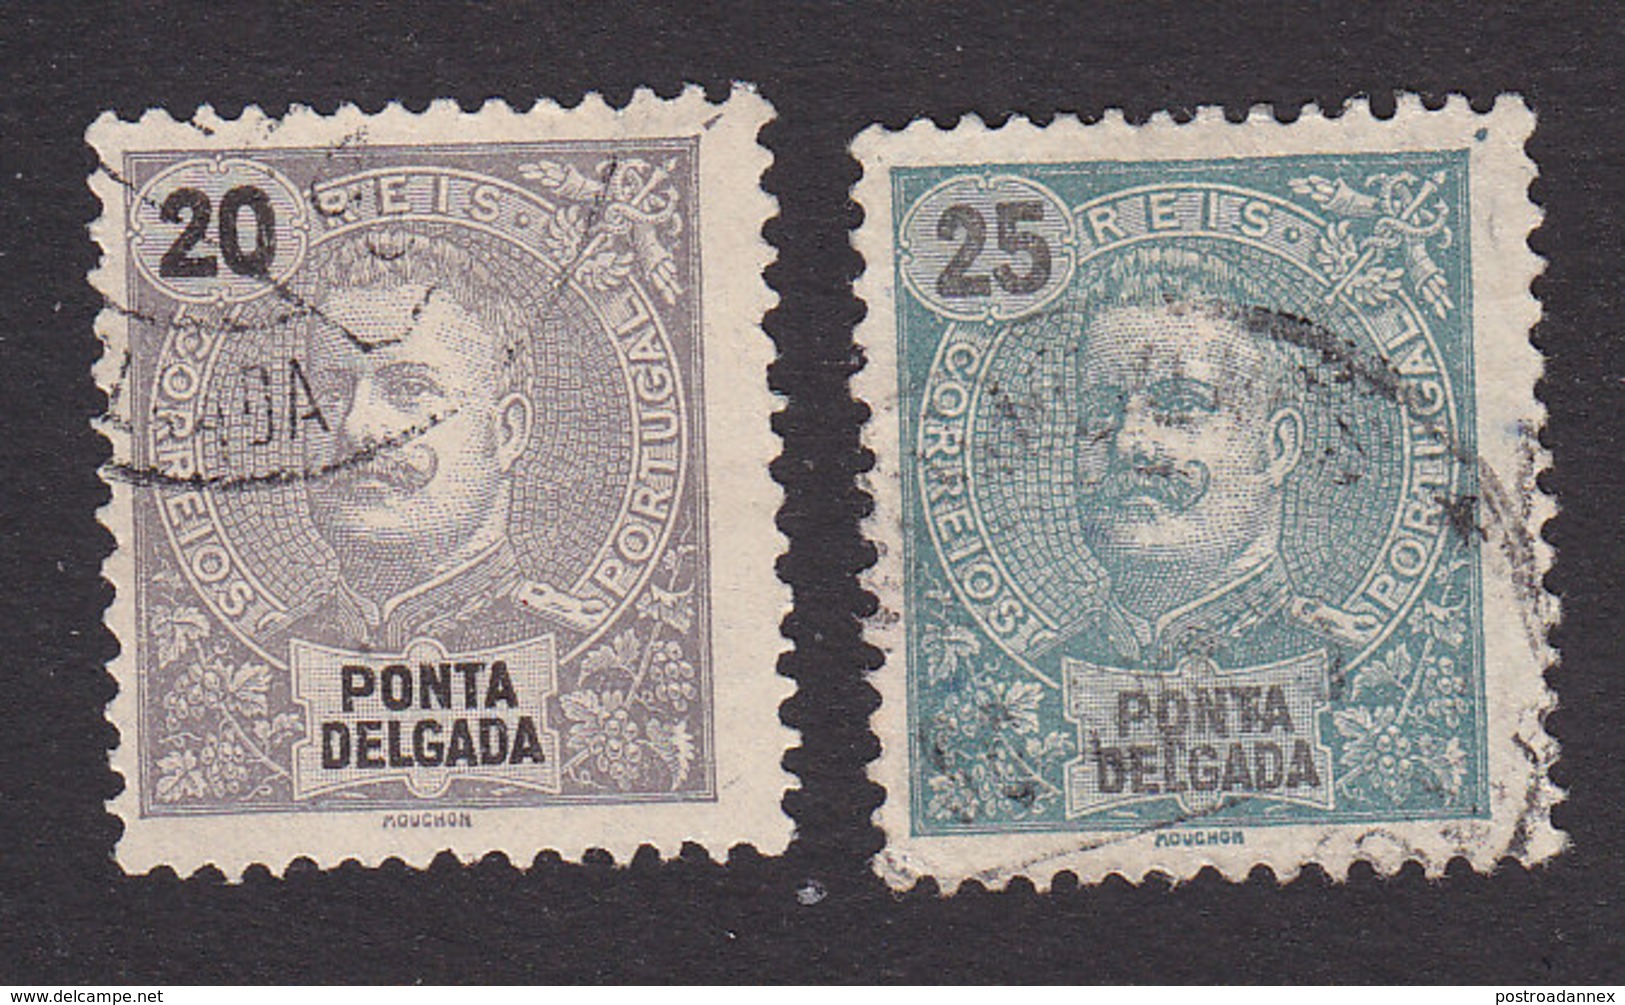 Ponta Delgada, Scott #18-19, Used, King Carlos, Issued 1897 - Ponta Delgada